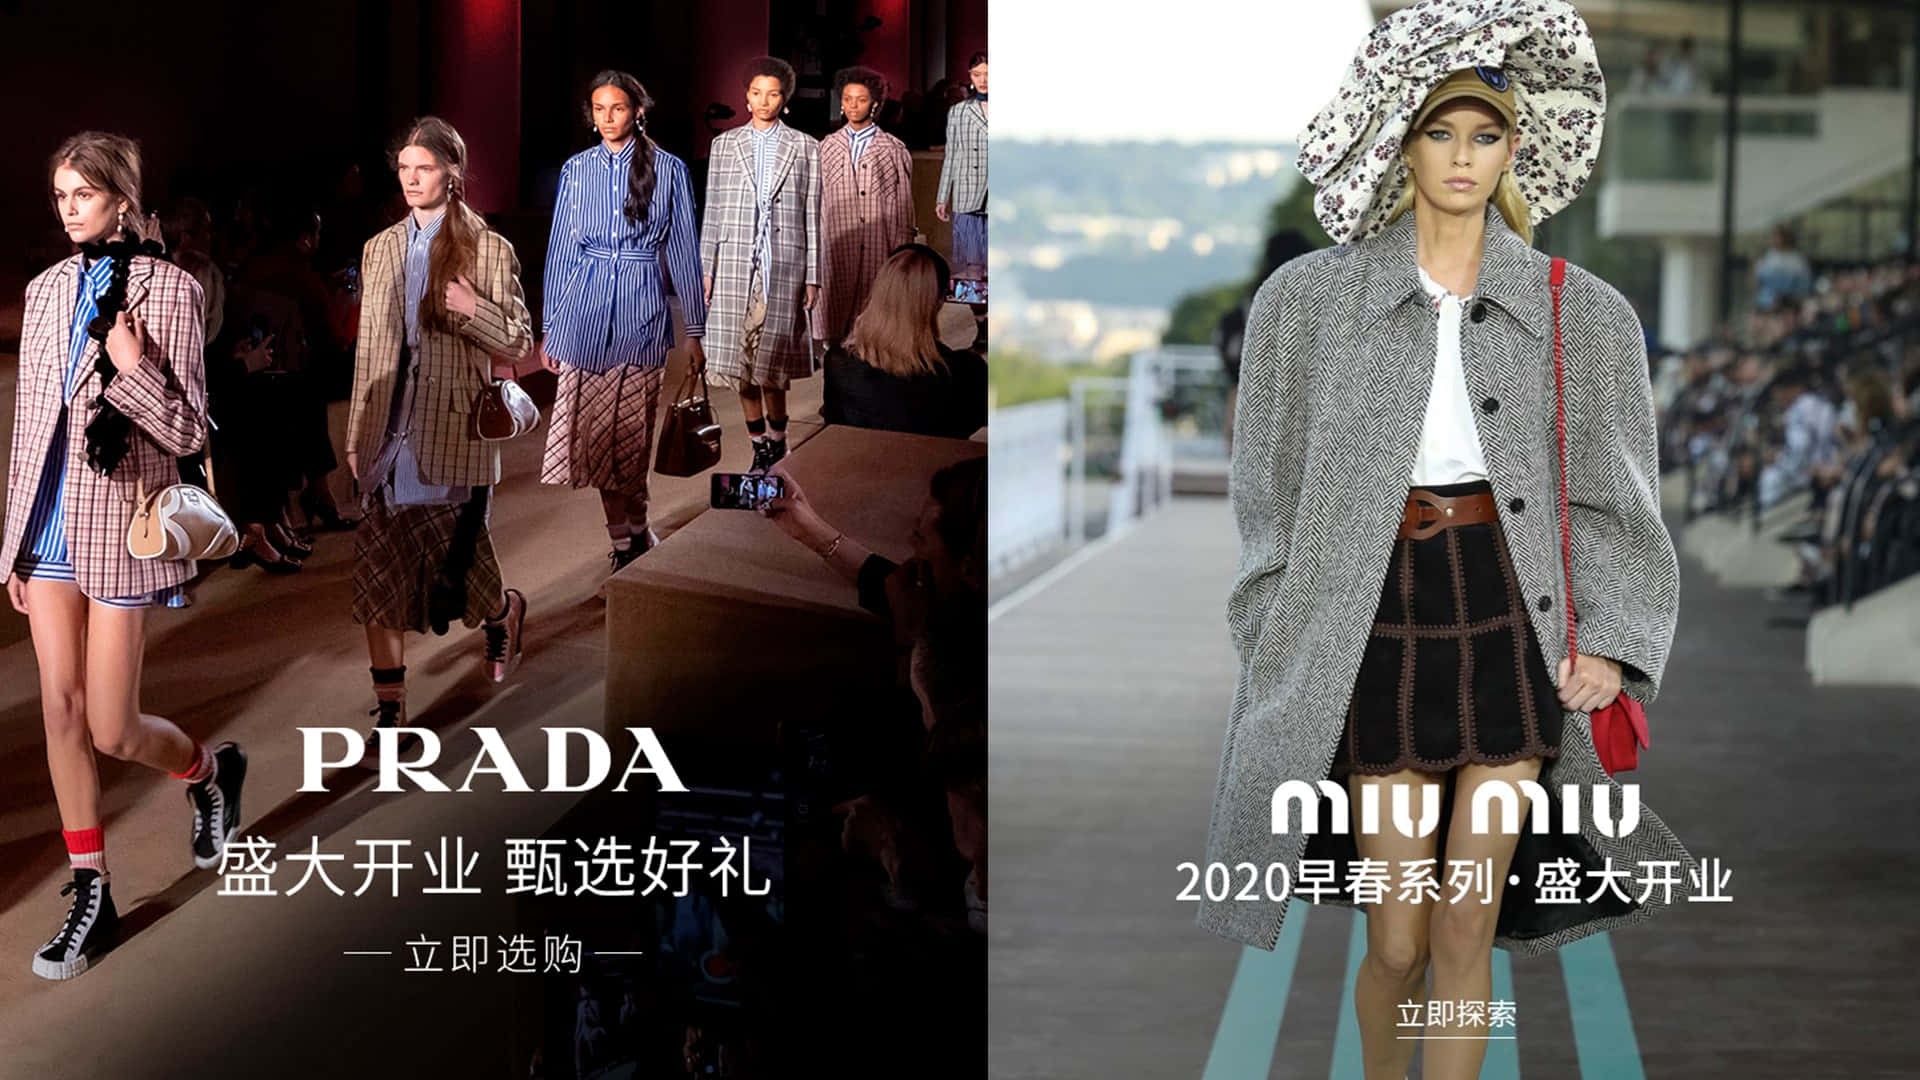 Caption: Chic Woman with Miu Miu Fashion Accessories Wallpaper